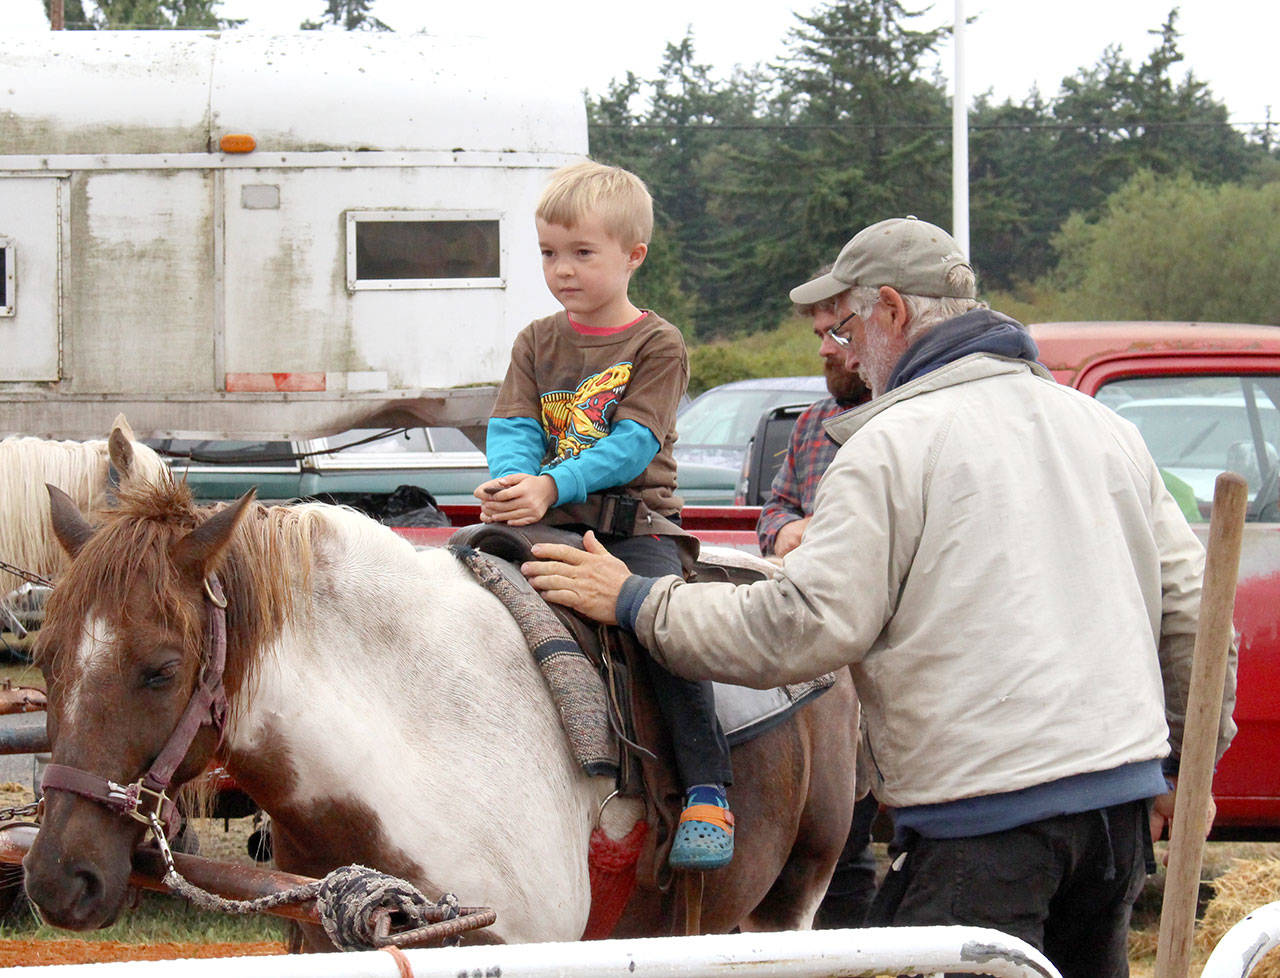 Charlie Buckham, 6, rides a pony Saturday at the Jefferson County Fair. (Zach Jablonski/Peninsula Daily News)